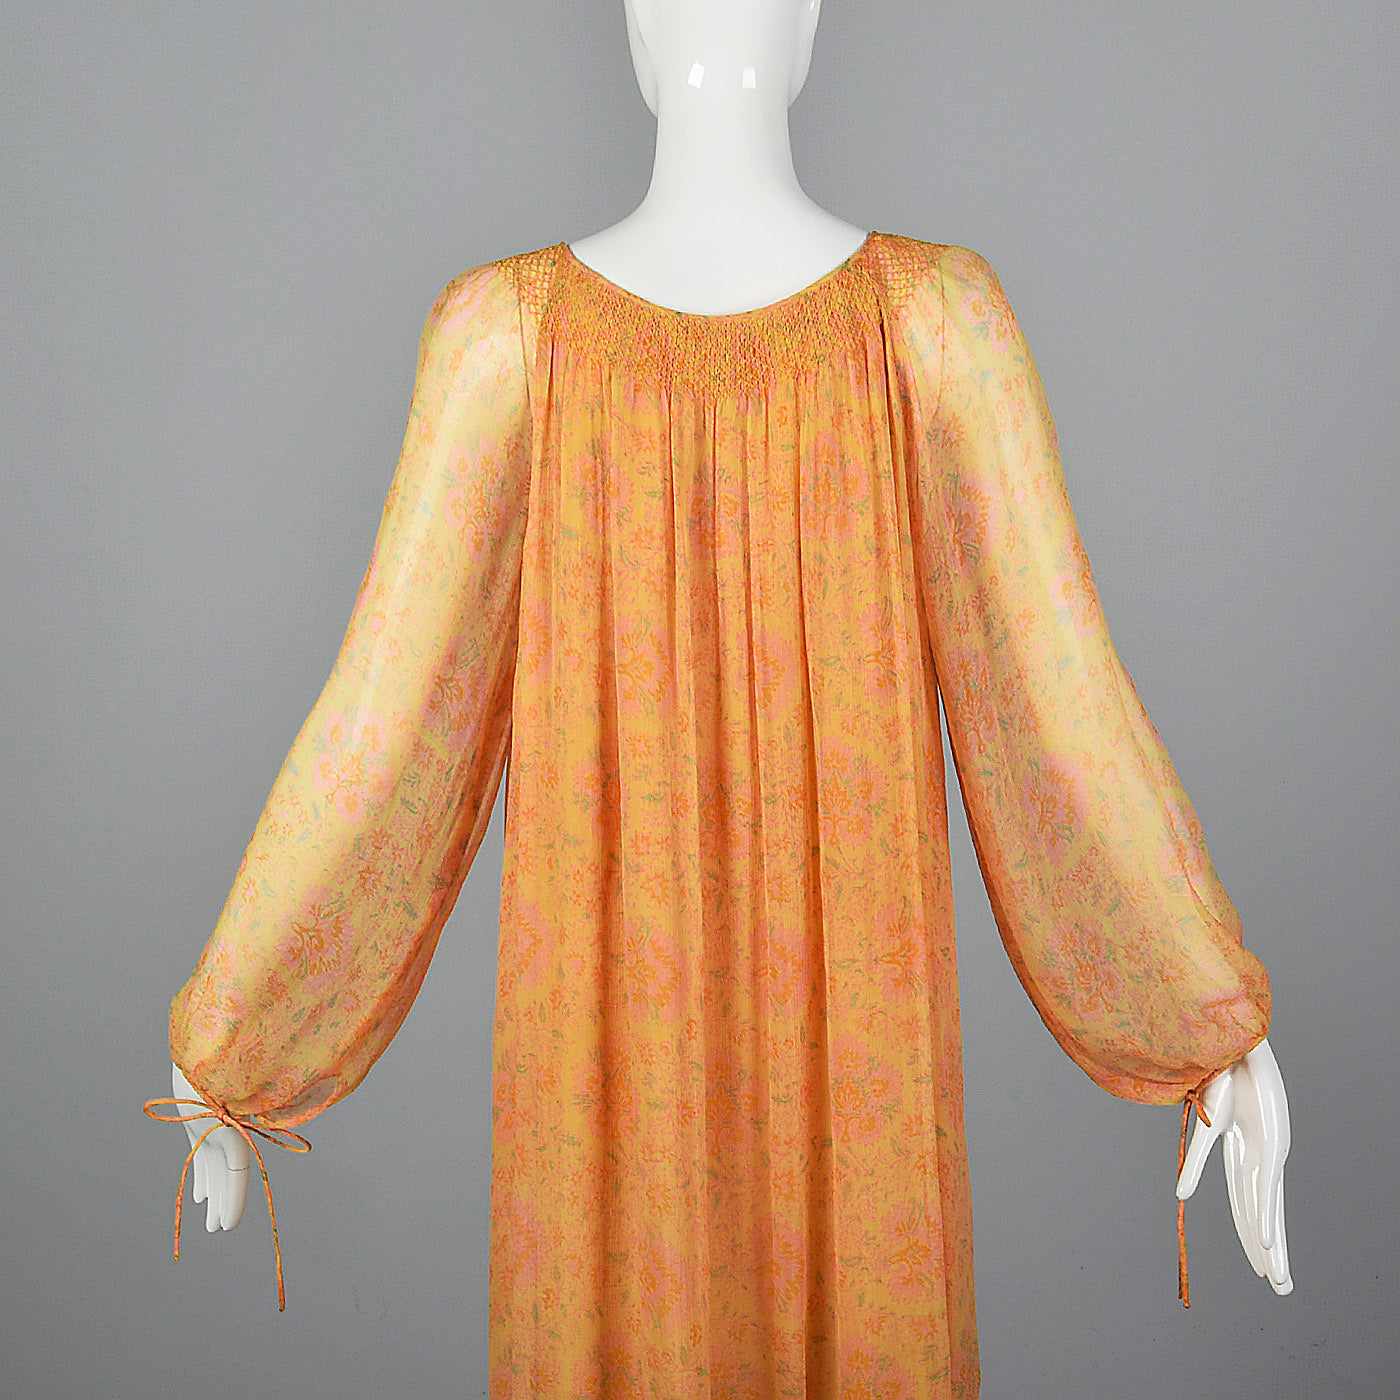 1970s Treacy Lowe Bohemian Silk Maxi Dress